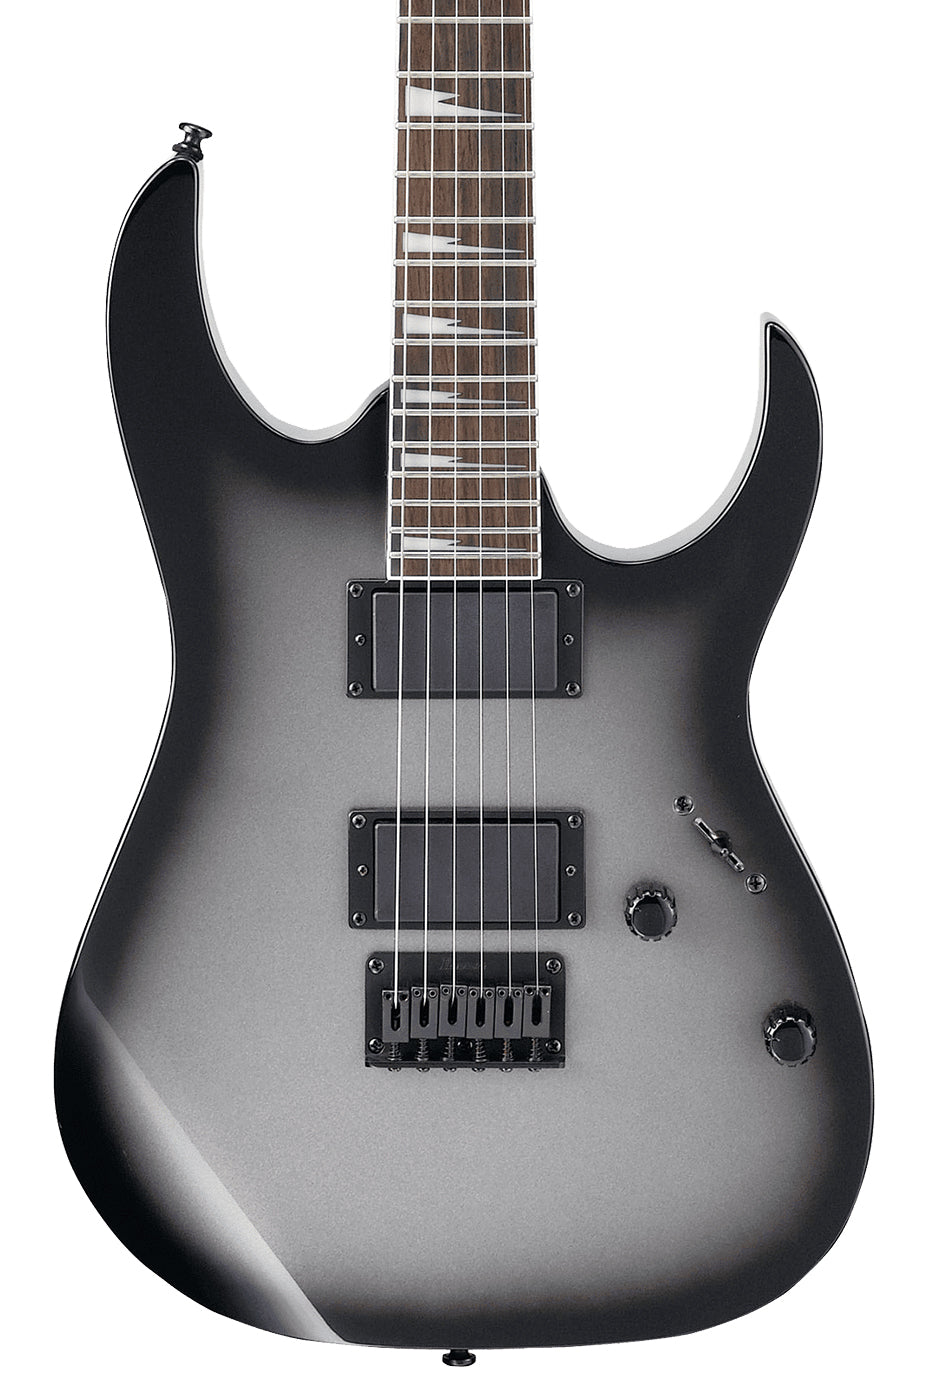 Ibanez GRG121DX Electric Guitar - Metallic Gray Sunburst